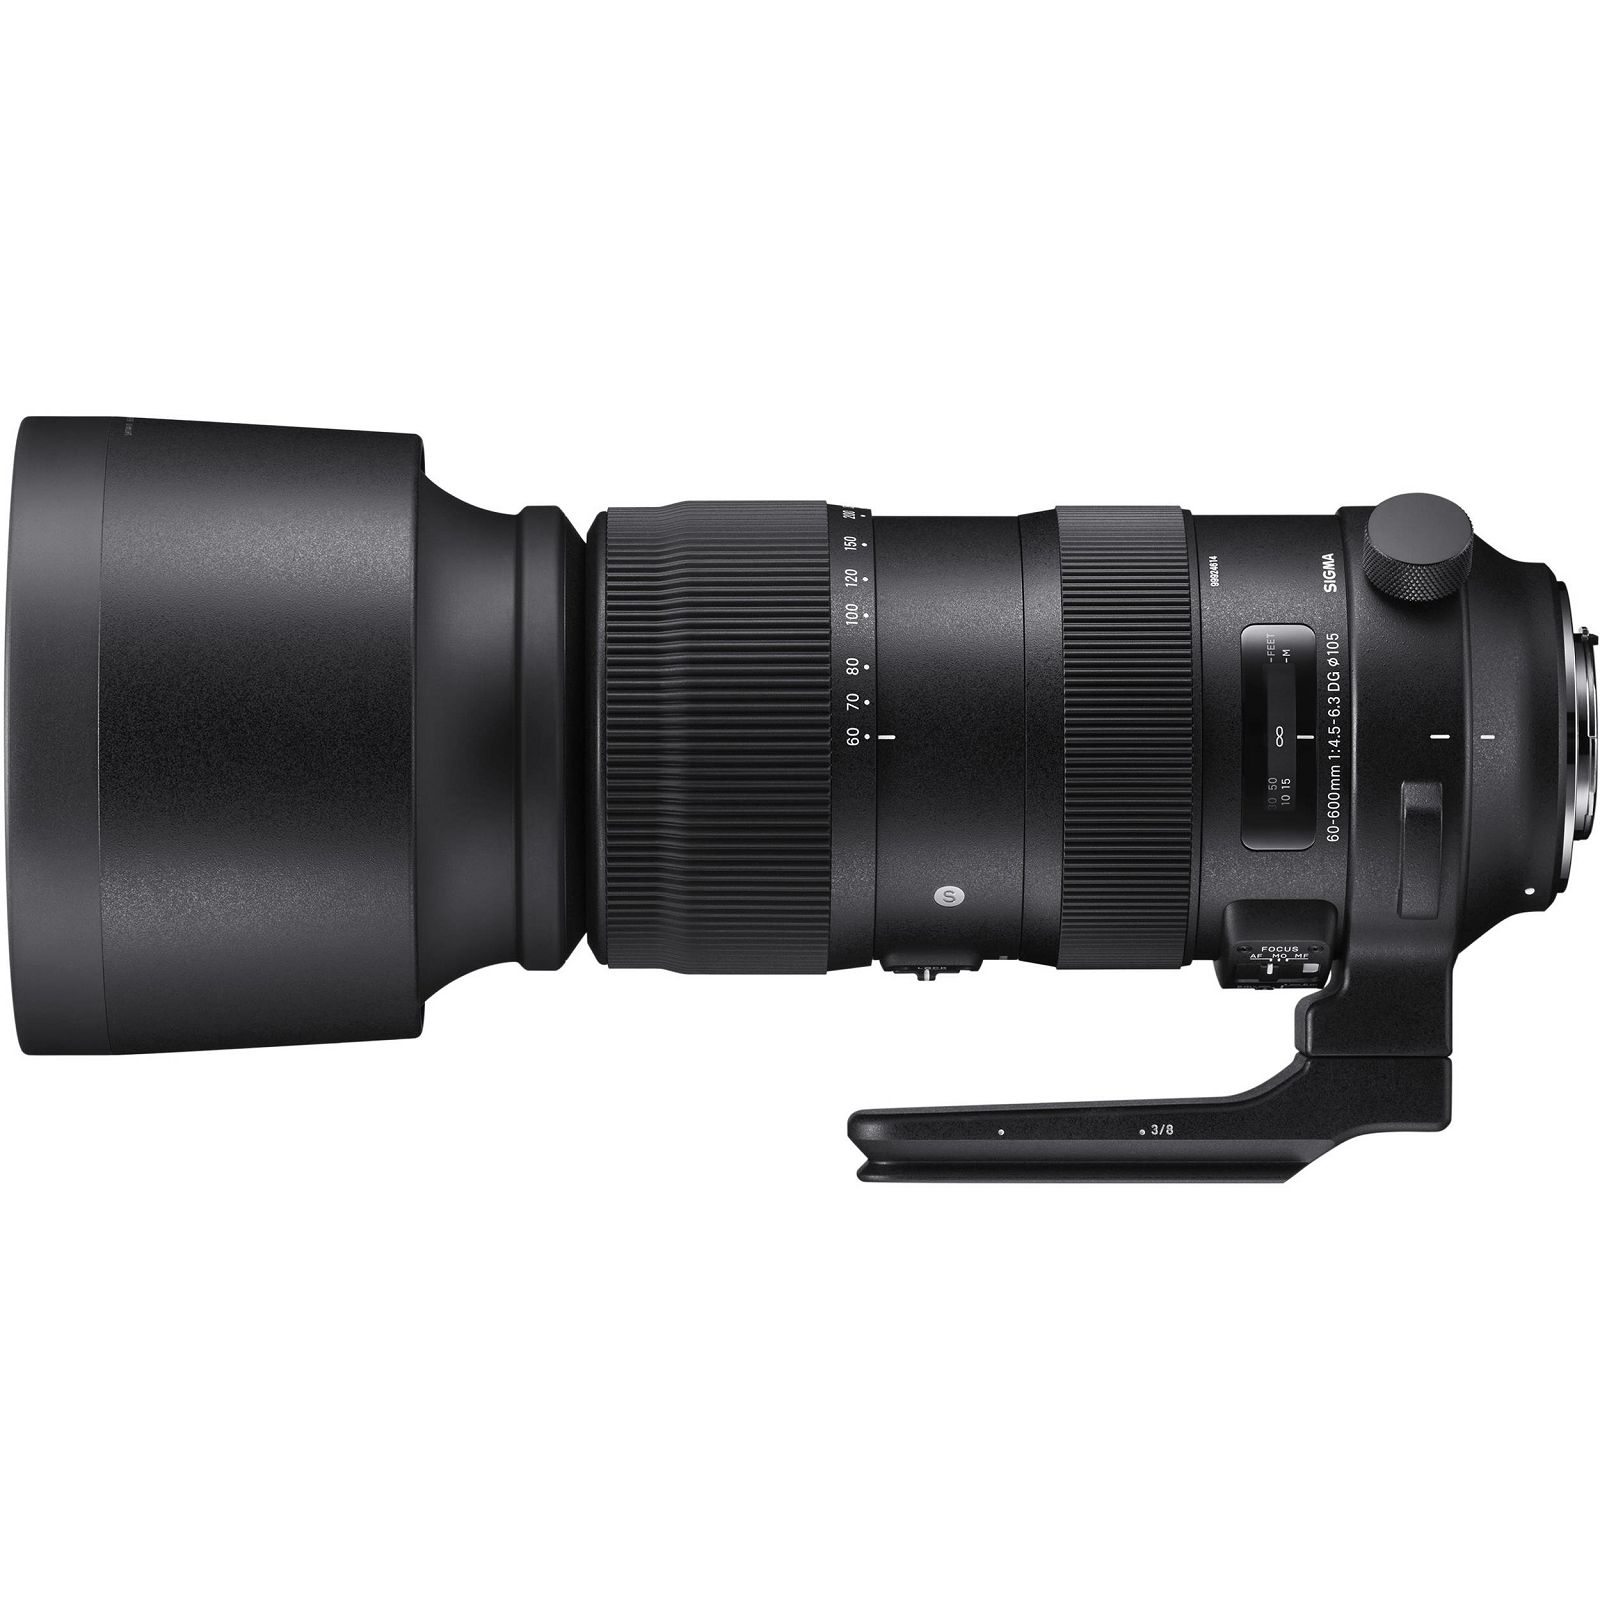 Sigma 60-600mm f/4.5-6.3 DG OS HSM Sport AF telefoto objektiv za Canon EF (SI730-954)